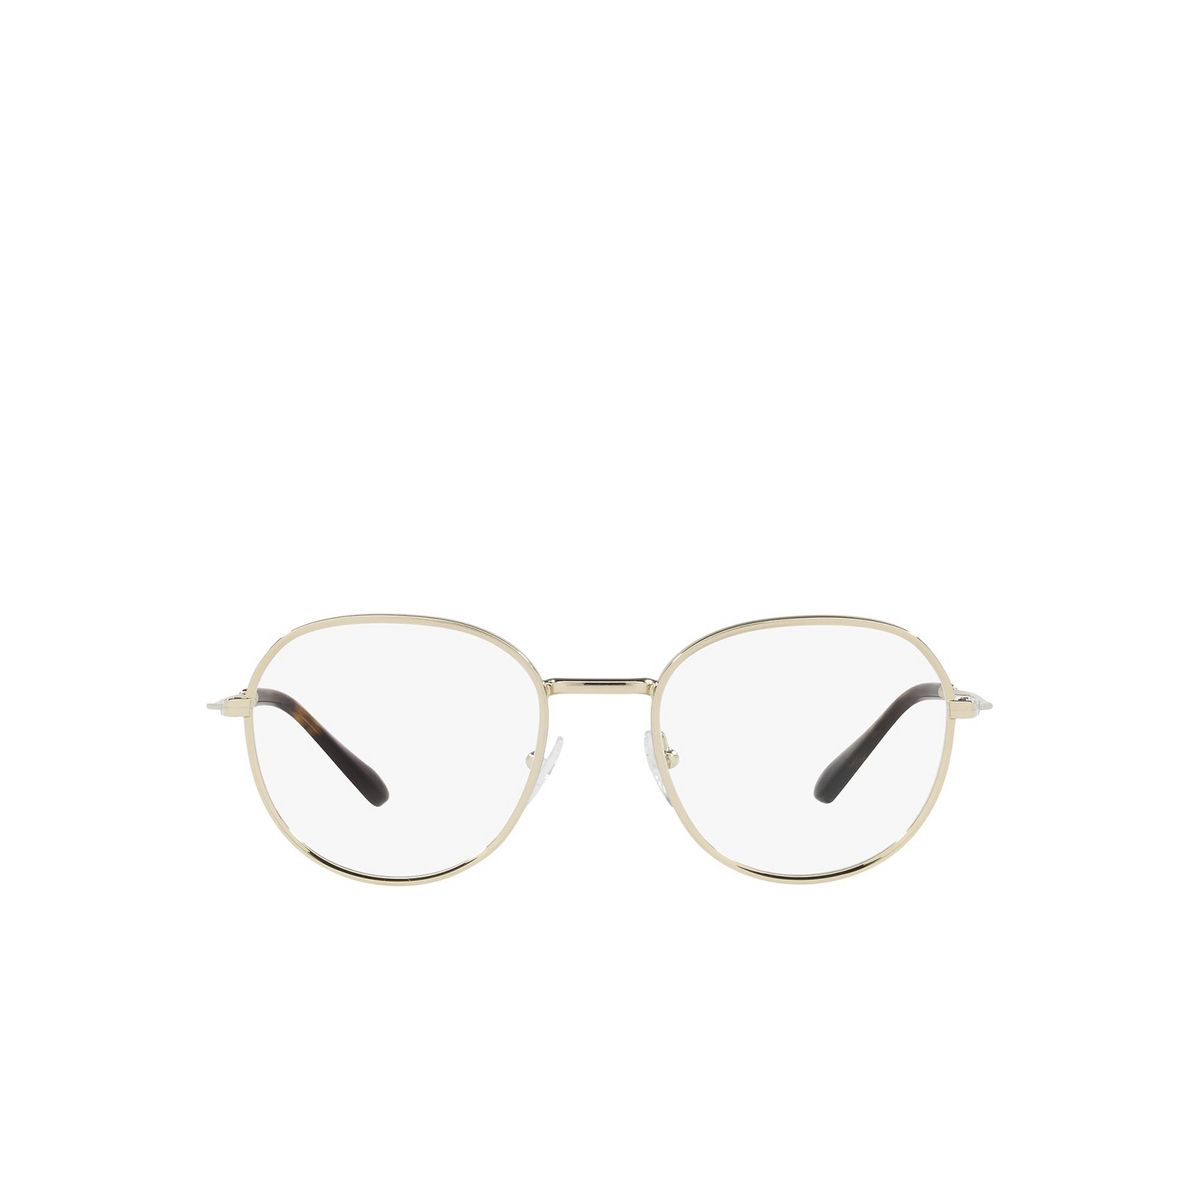 Prada® Oval Eyeglasses: PR 65WV color Pale Gold ZVN1O1 - front view.